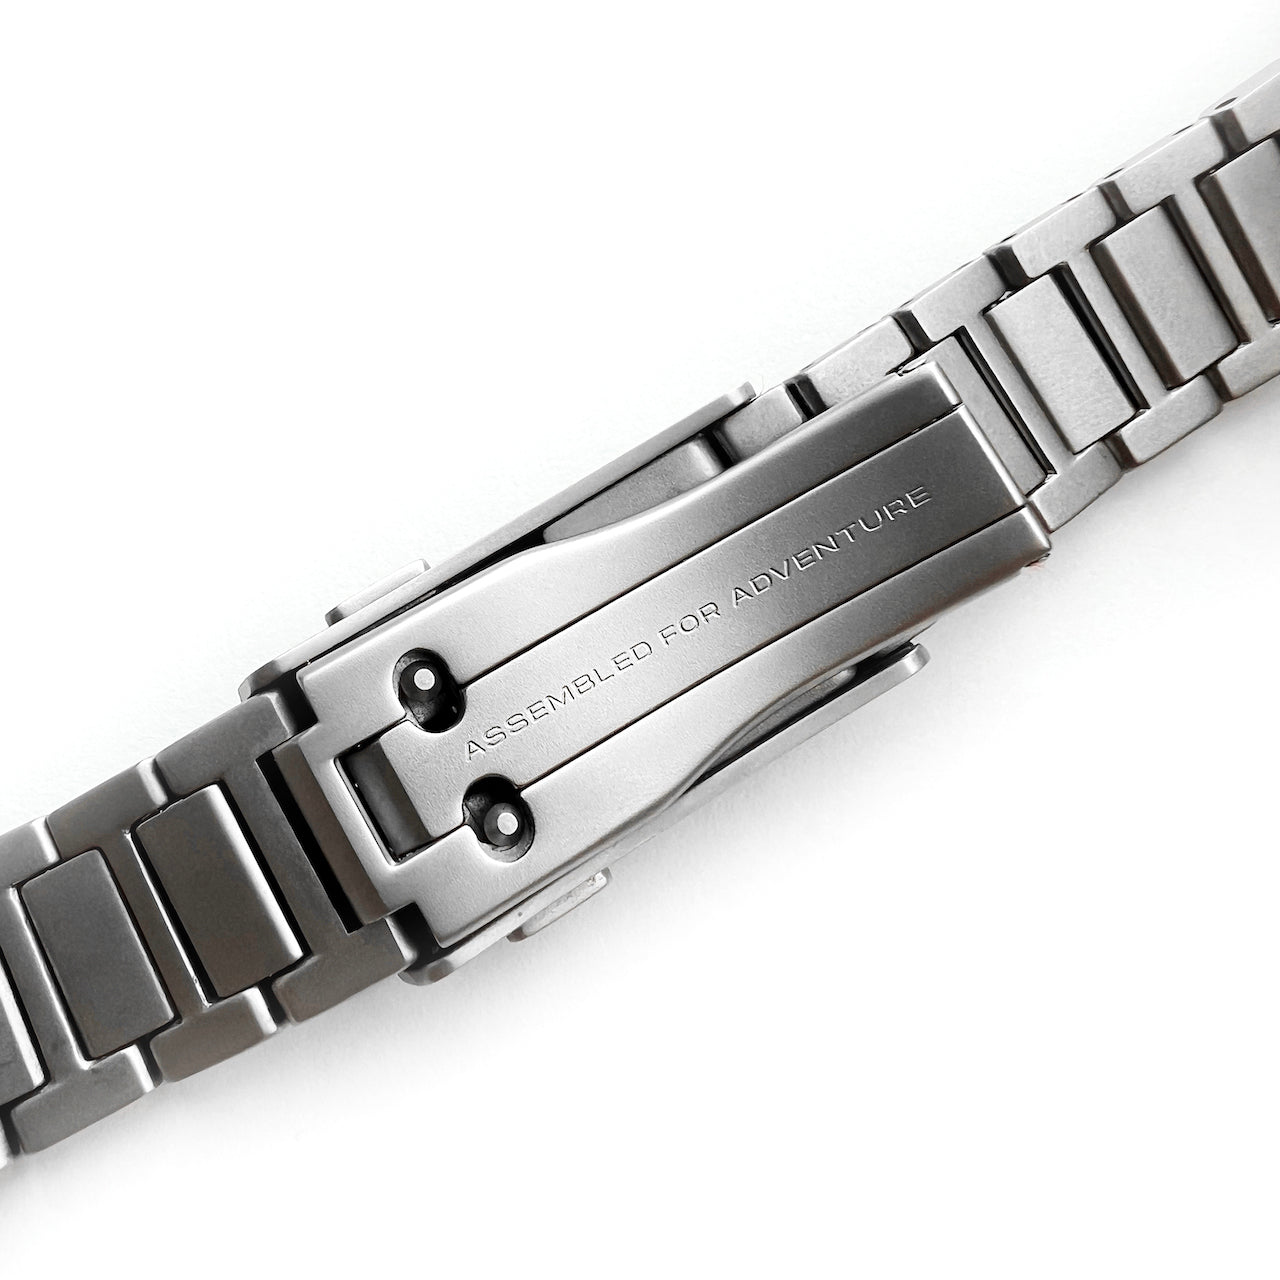 9 Latest Designs of Titanium Bracelets for Men